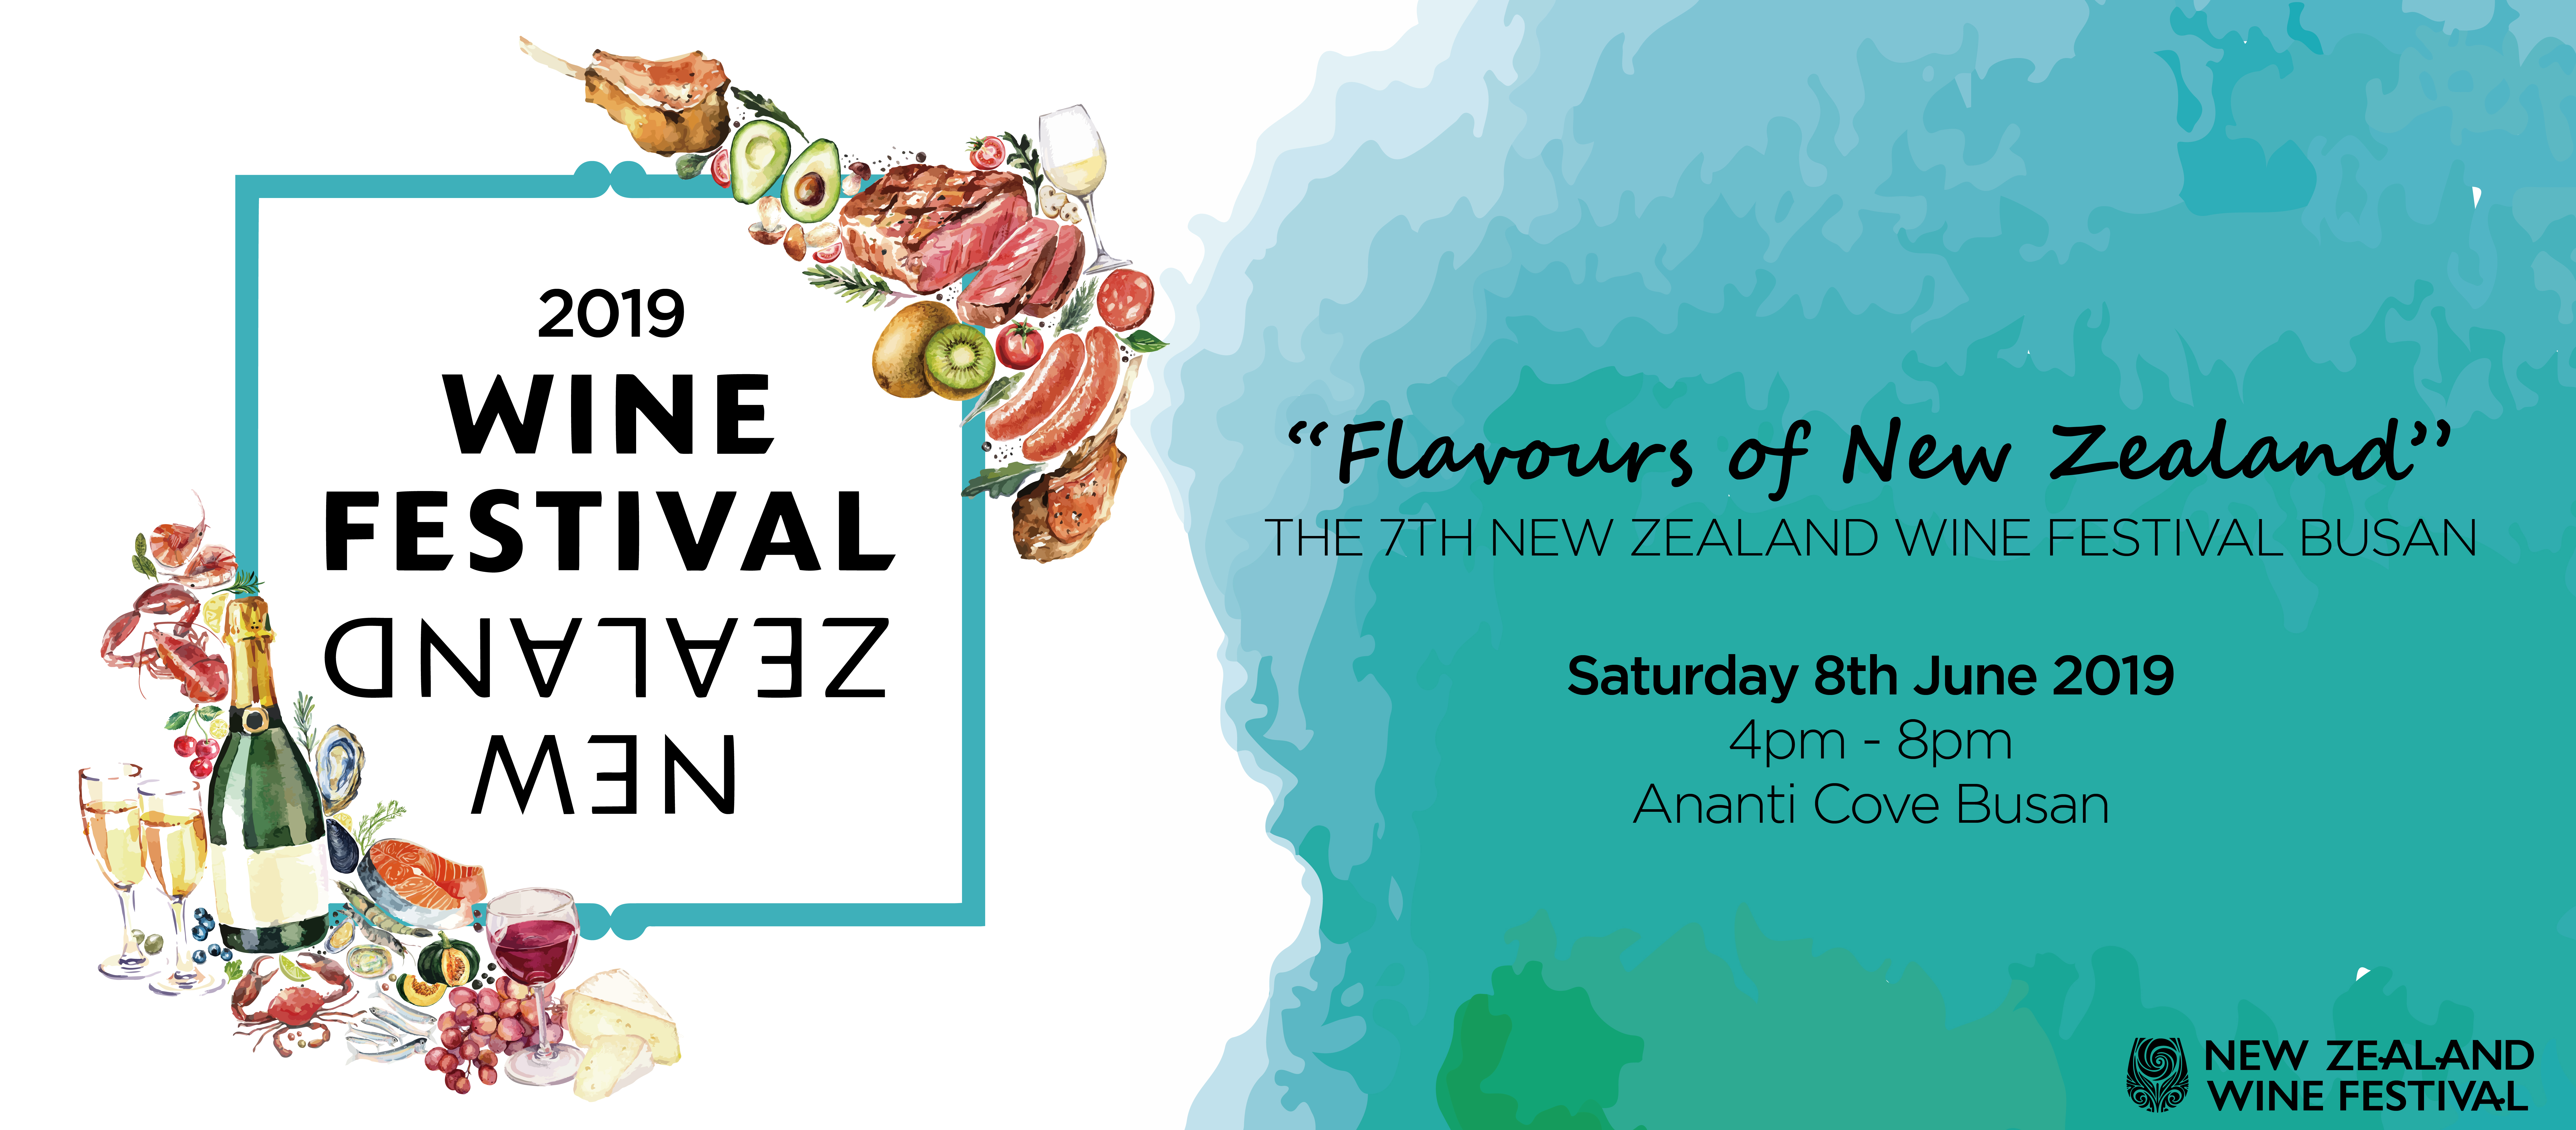 The 2019 New Zealand Wine Festival Busan